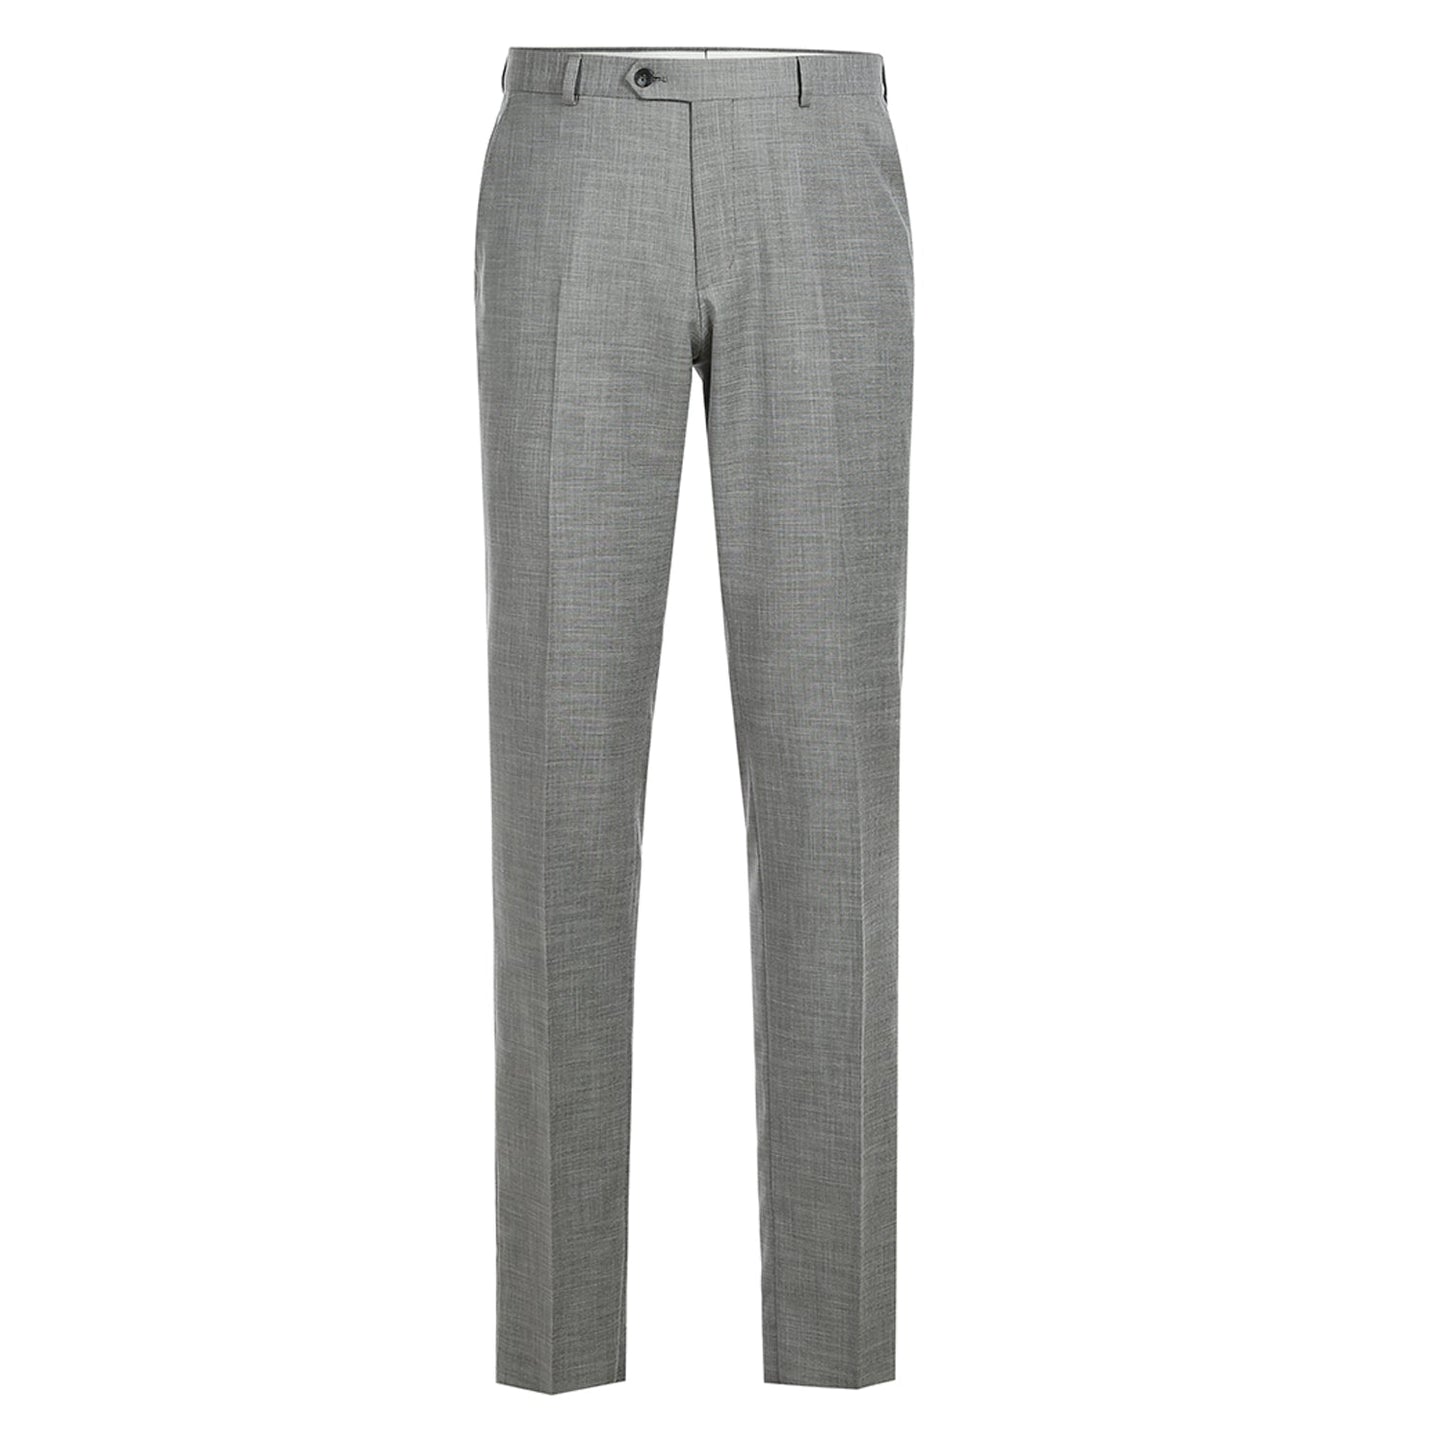 293-17 Men's Slim Fit Notch Lapel Light Gray Sharkskin Suit